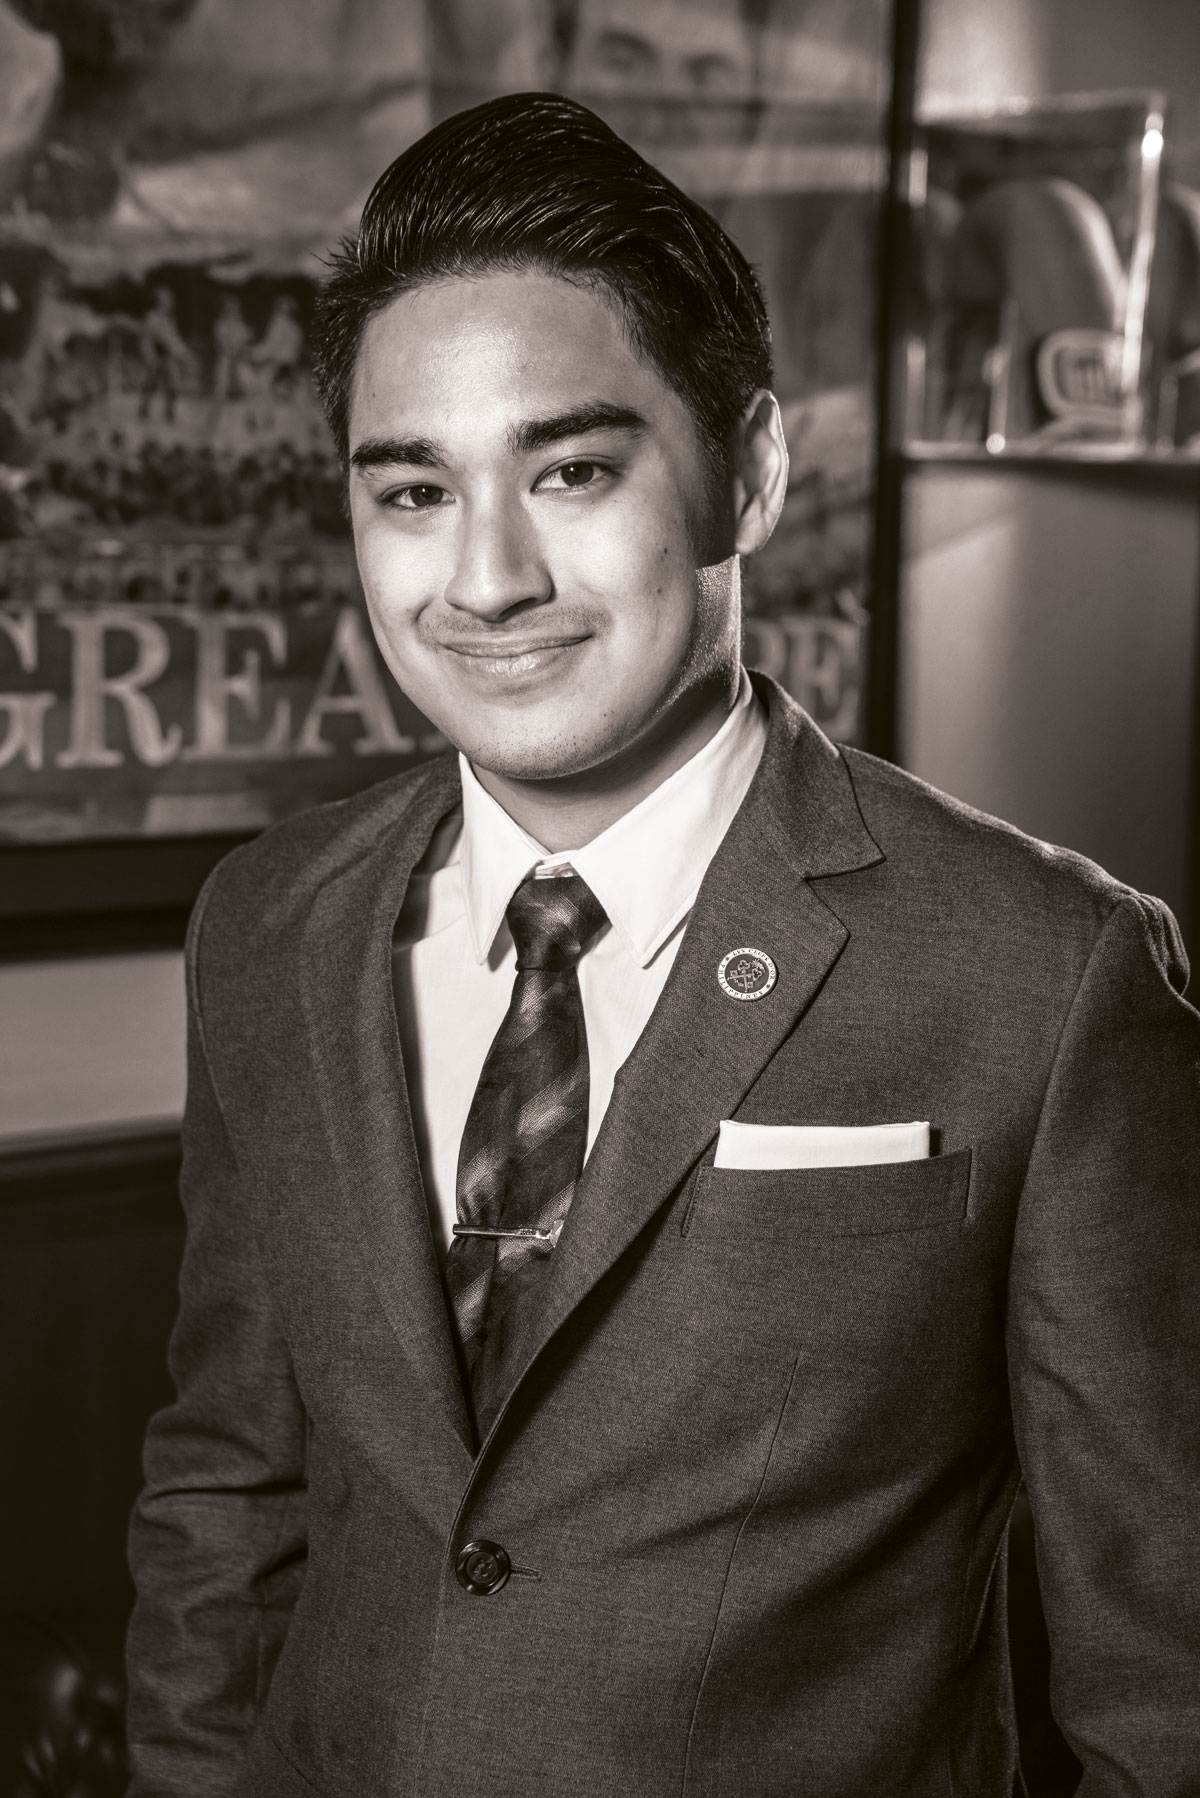 Carlo Fornier is a concierge at The Peninsula Manila